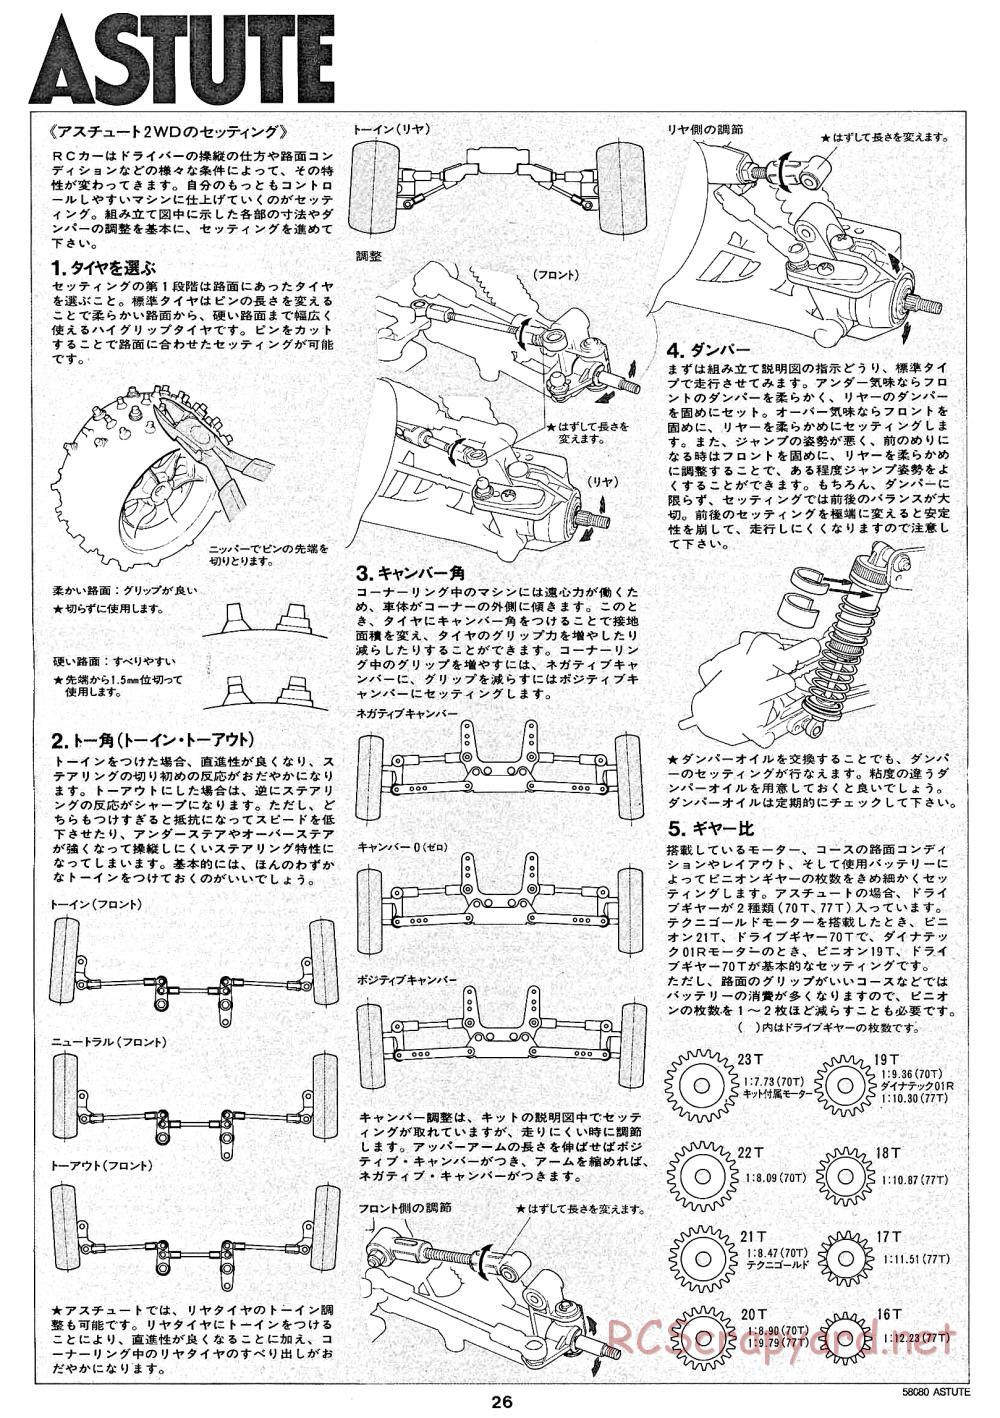 Tamiya - Astute - 58080 - Manual - Page 26